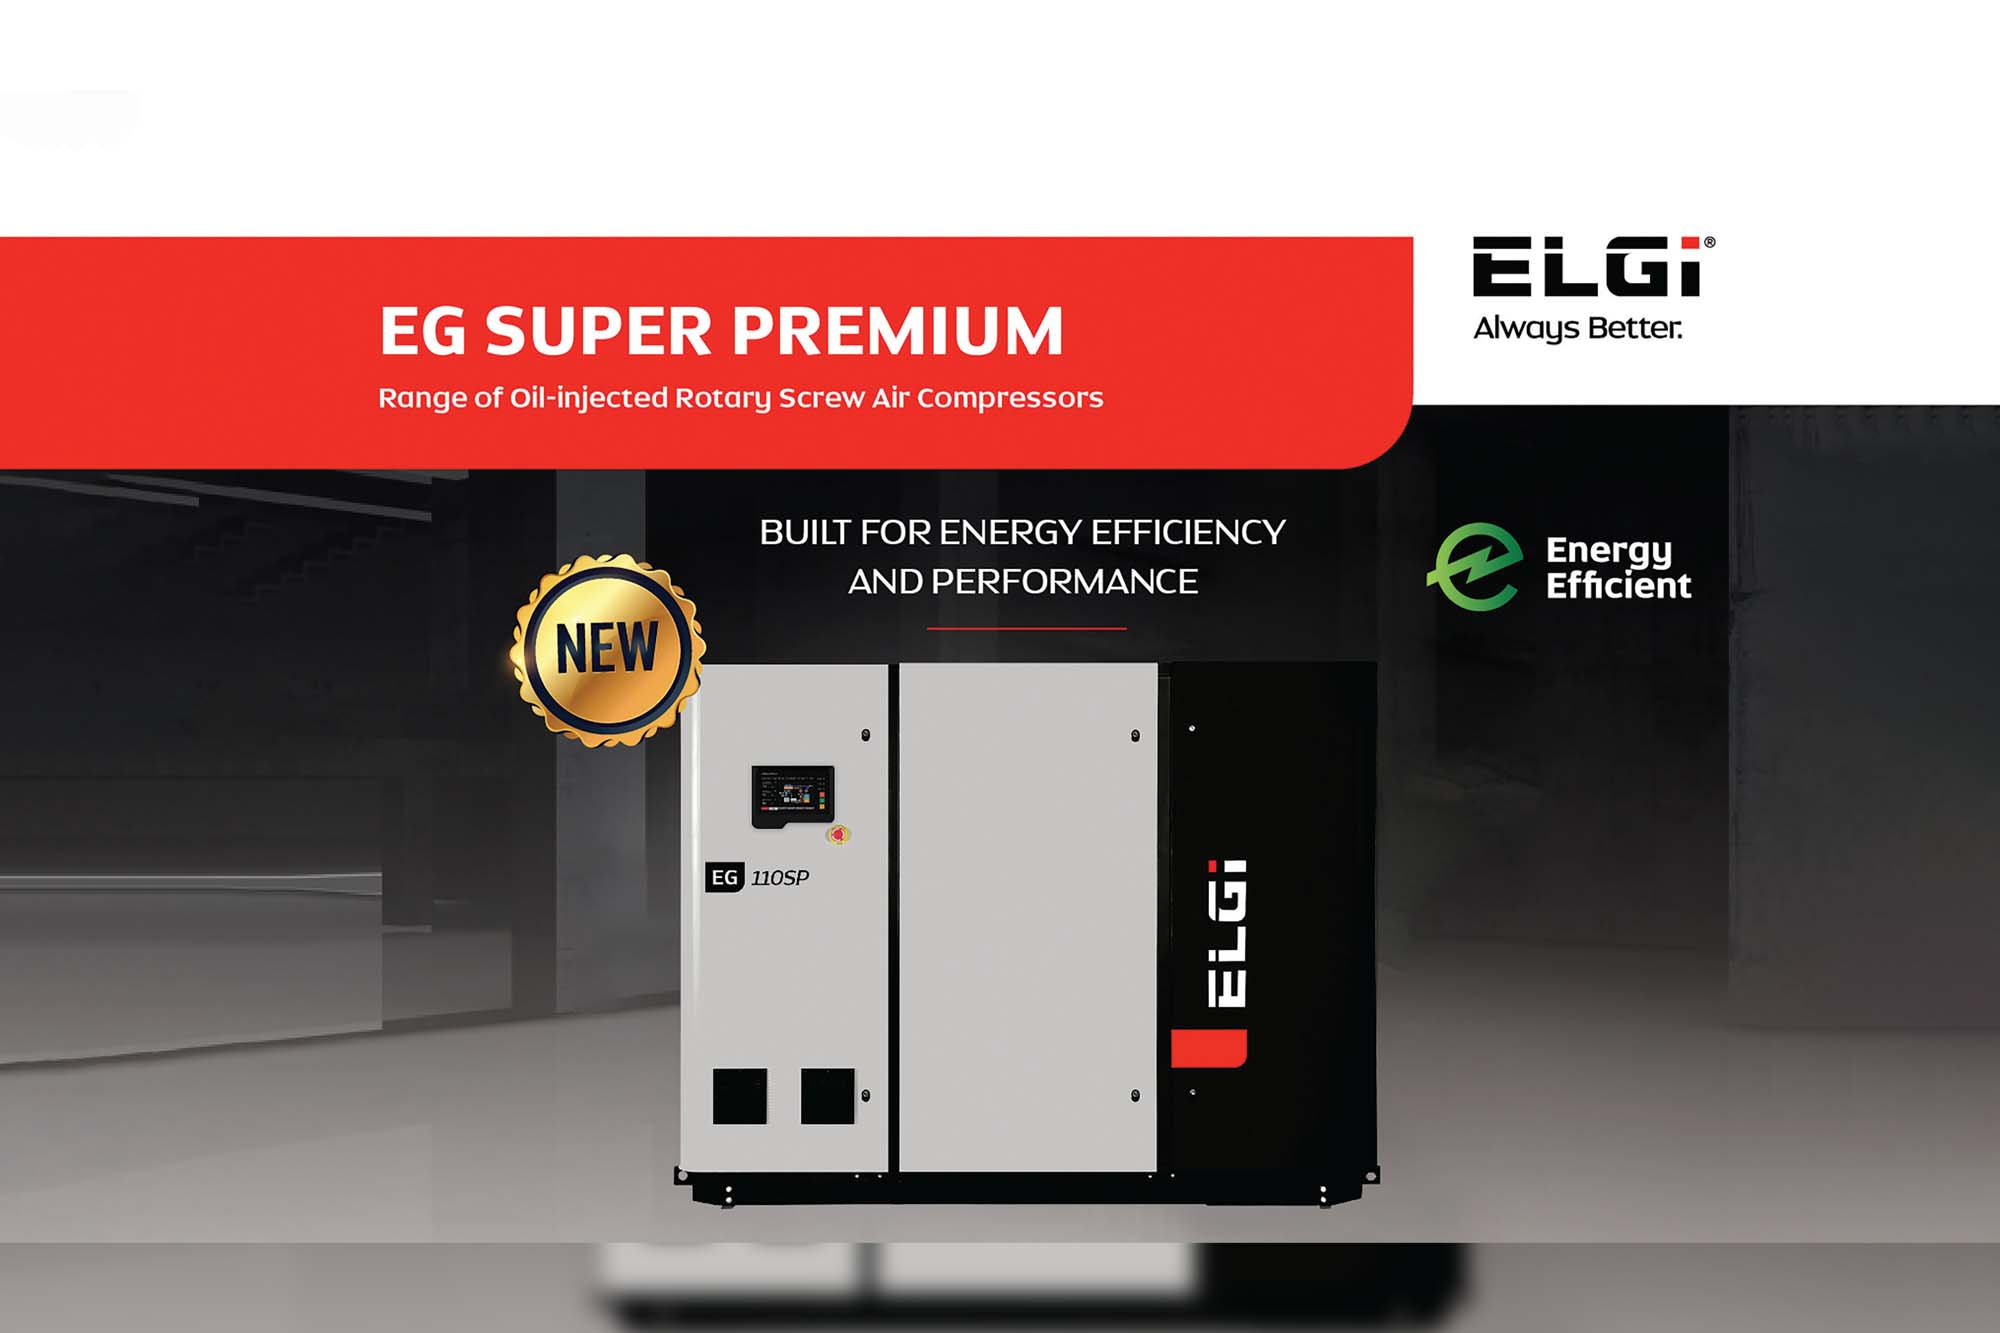 ELGi EG PM oil-lubricated screw compressors assure lifecycle value